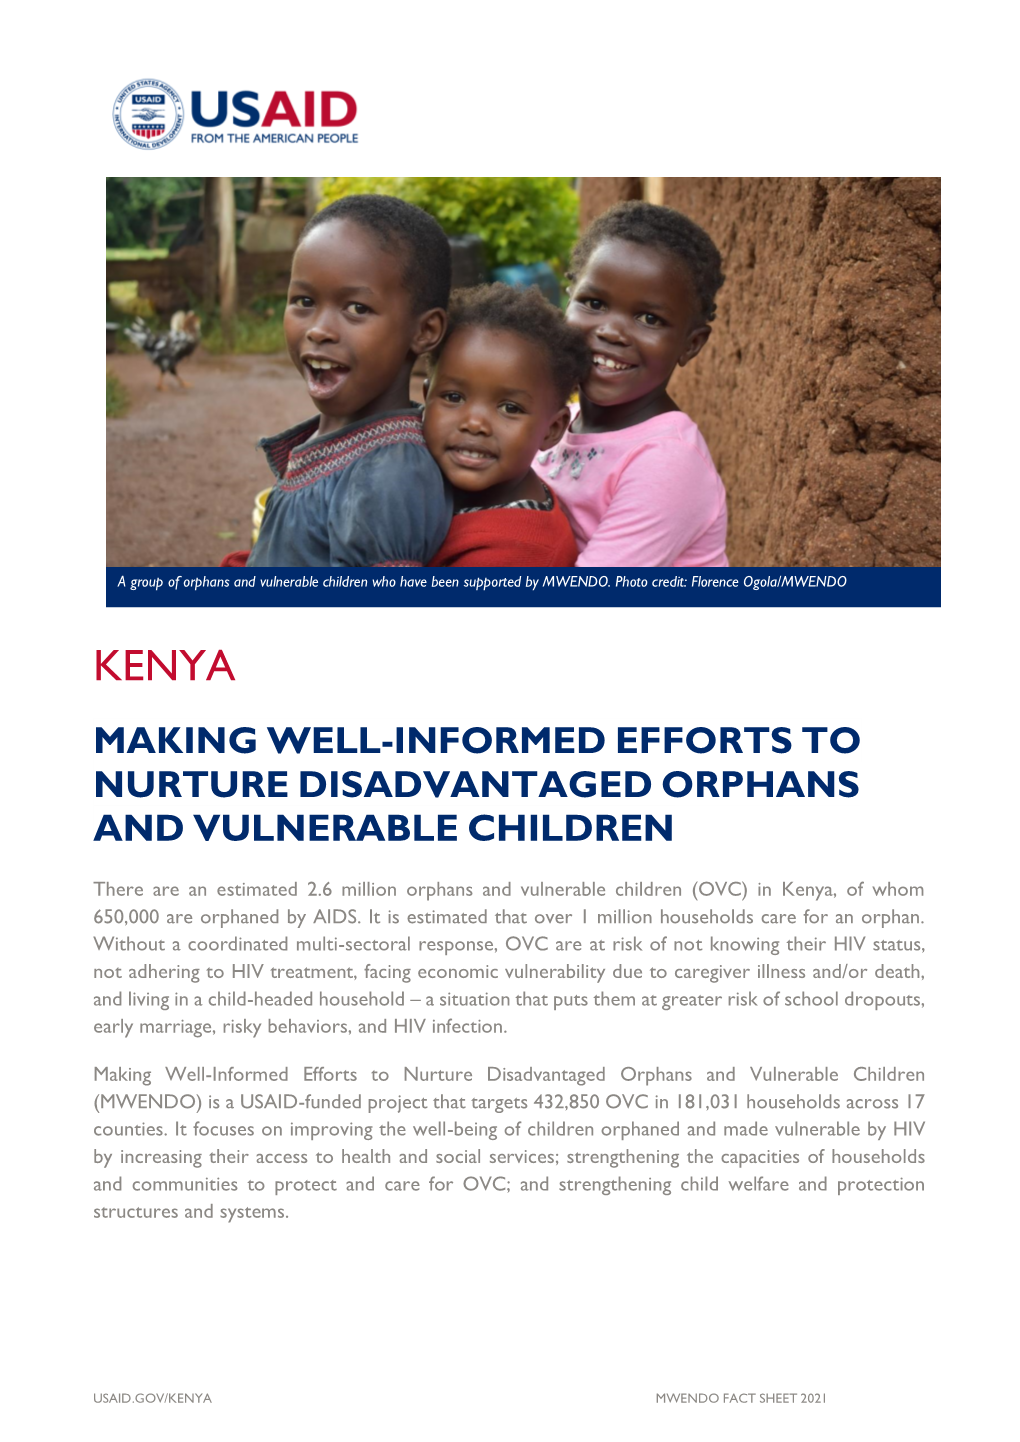 MWENDO Orphans and Vulnerable Children Fact Sheet